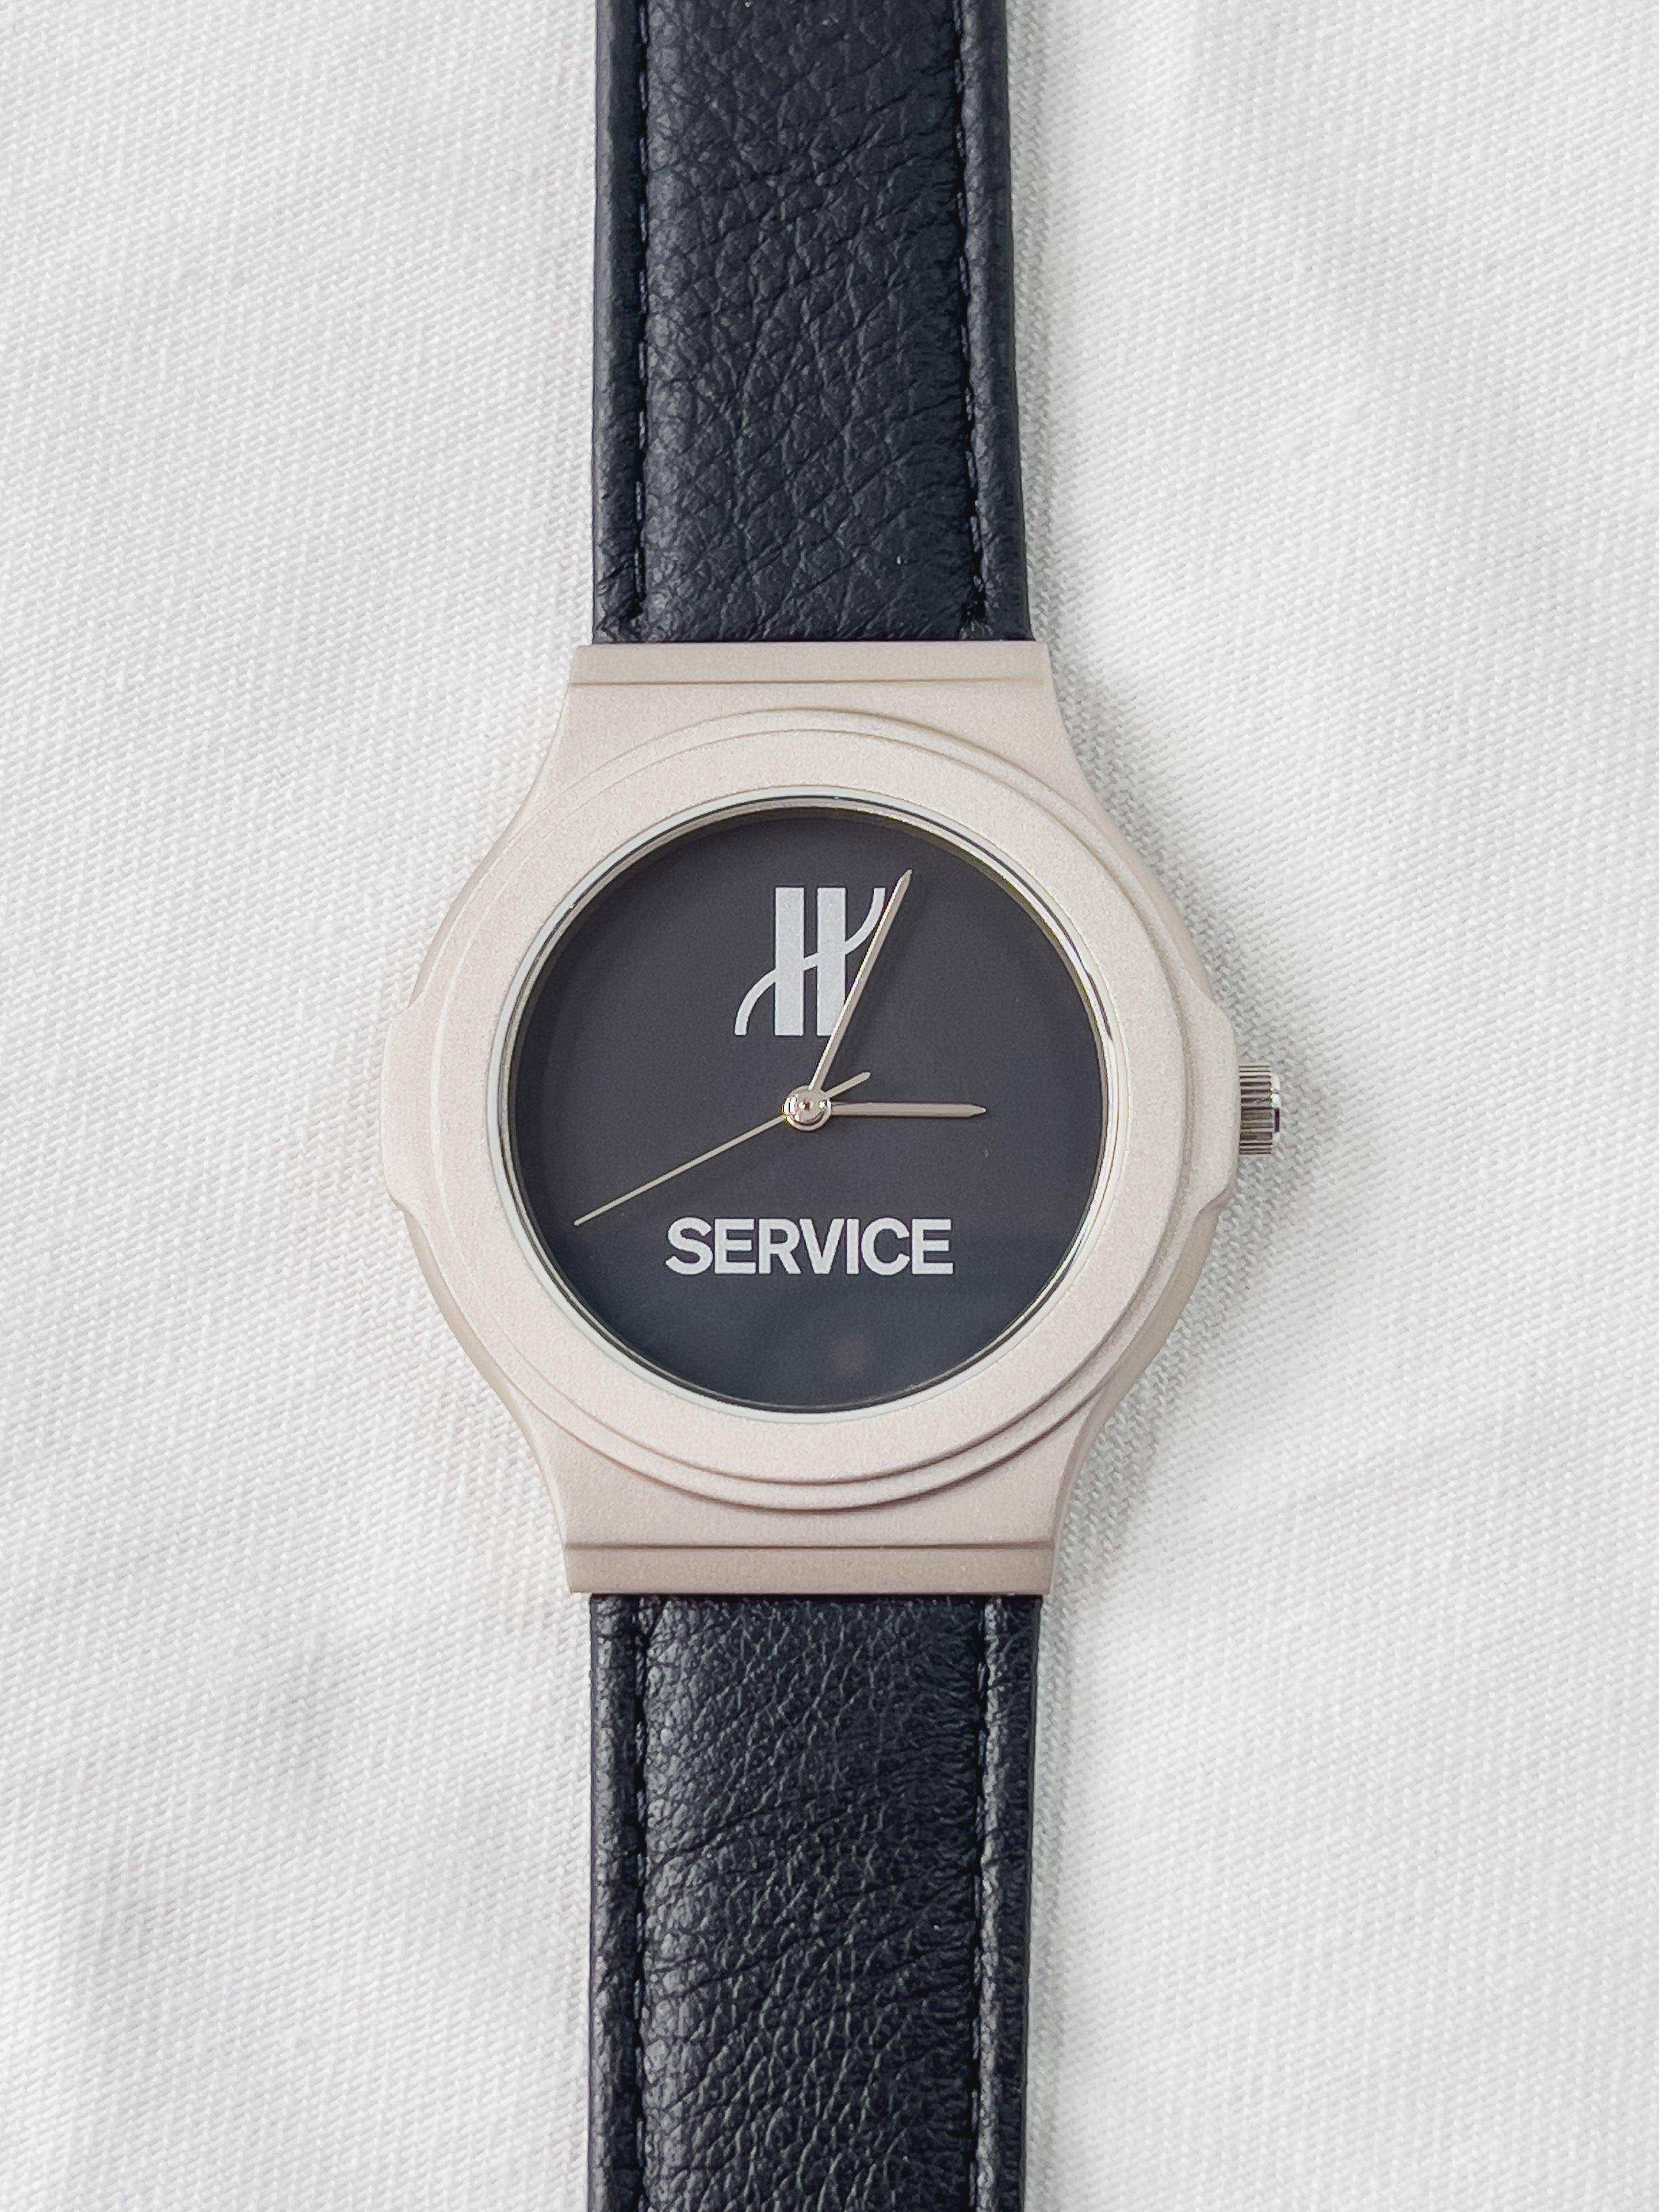 Hublot - Service - 1990/00's - Atelier Victor